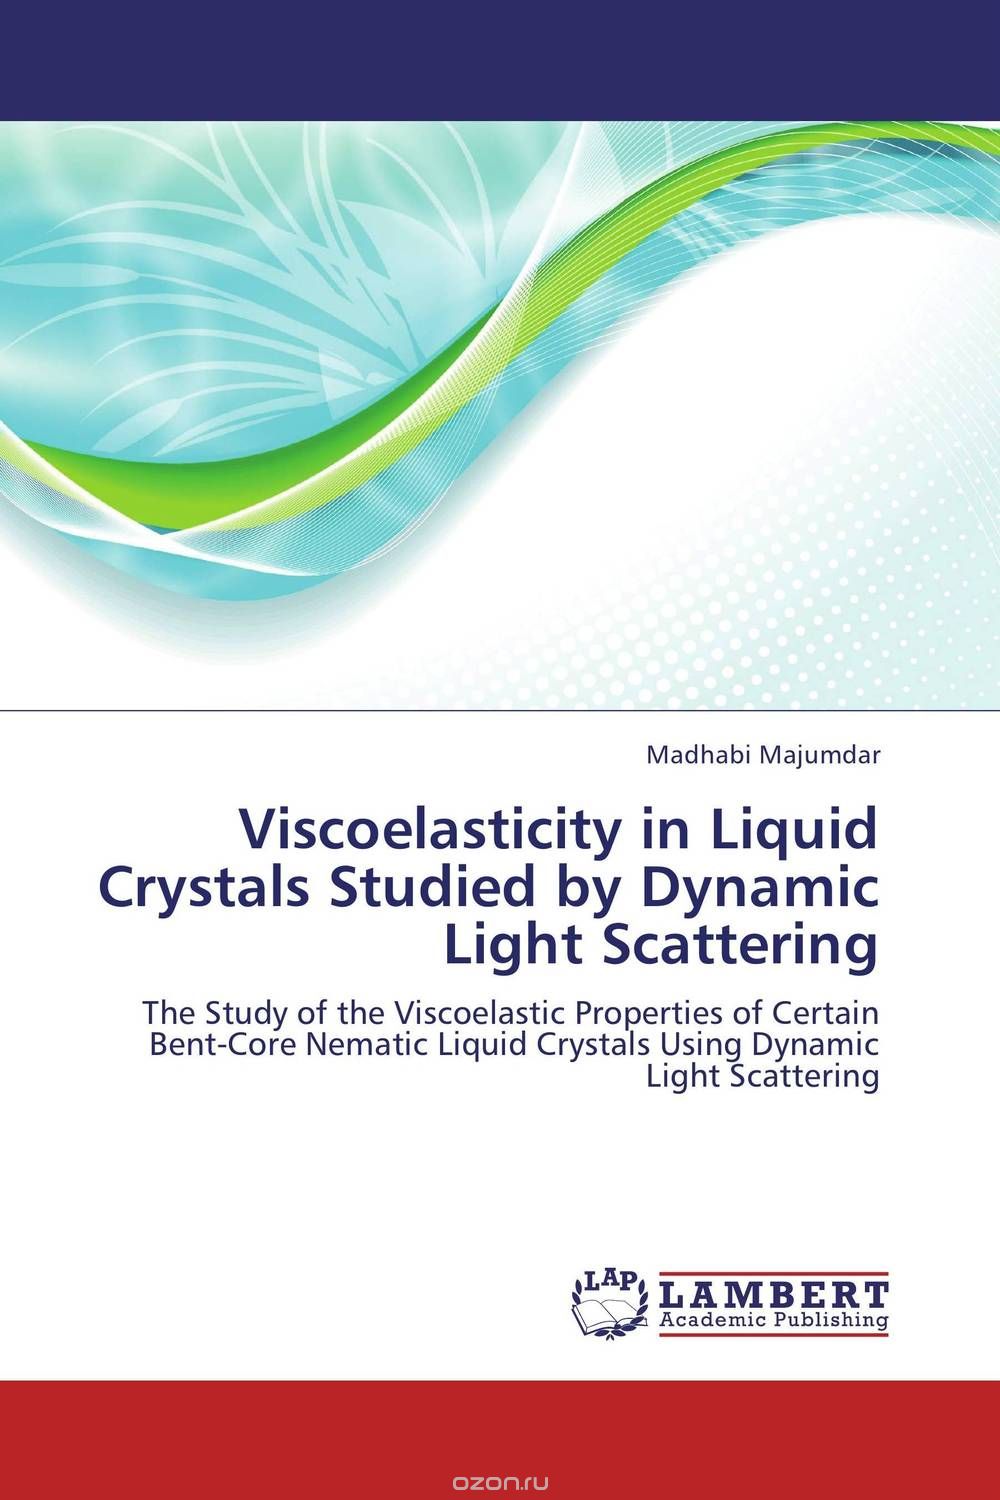 Скачать книгу "Viscoelasticity in Liquid Crystals Studied by Dynamic Light Scattering"